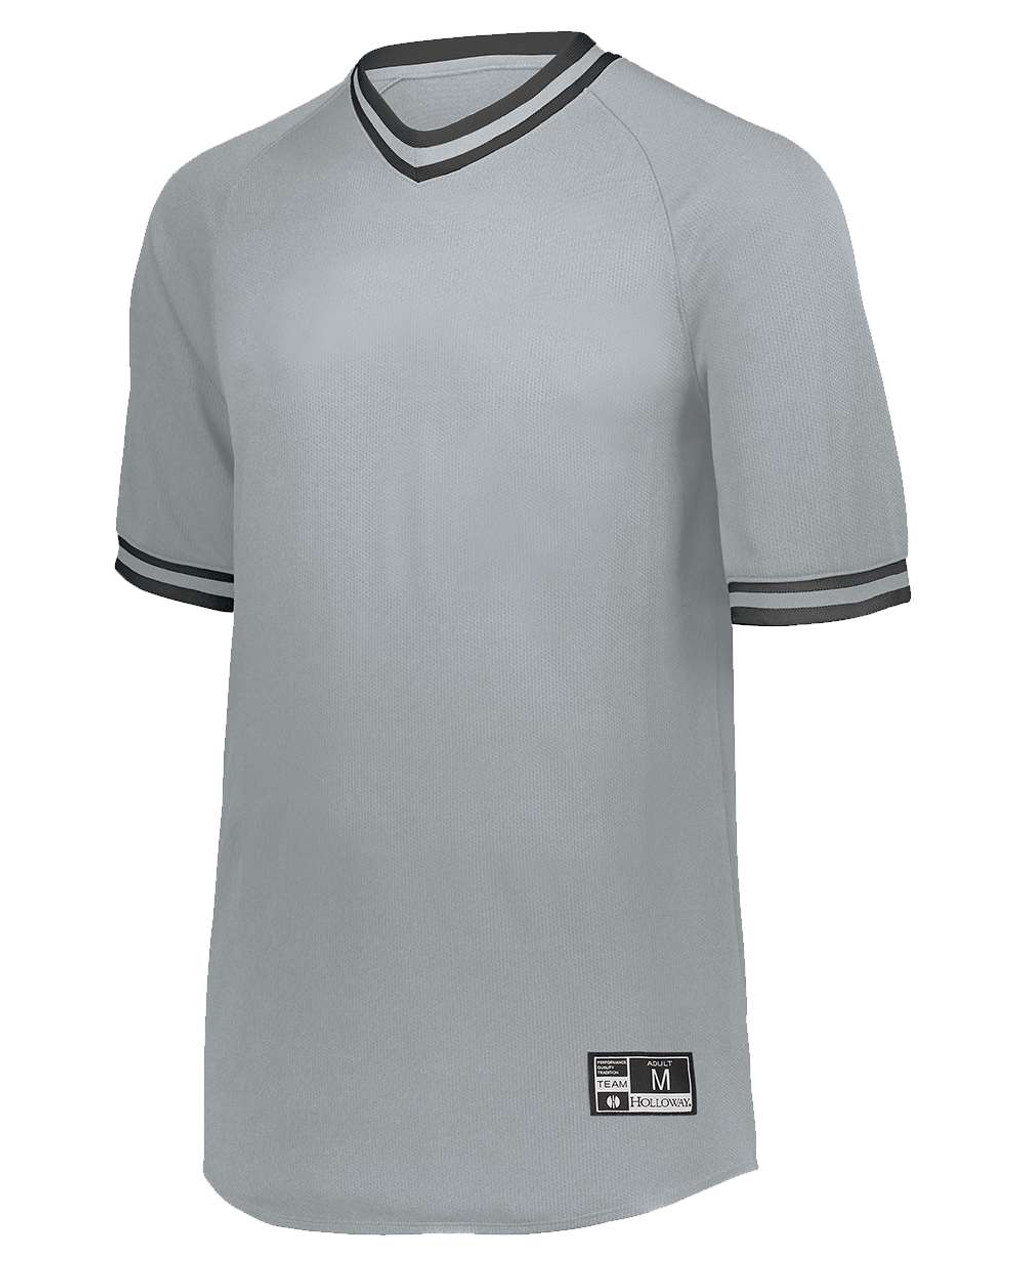 Retro V-Neck Baseball Jersey, Custom Apparel Online, Fast & Affordable